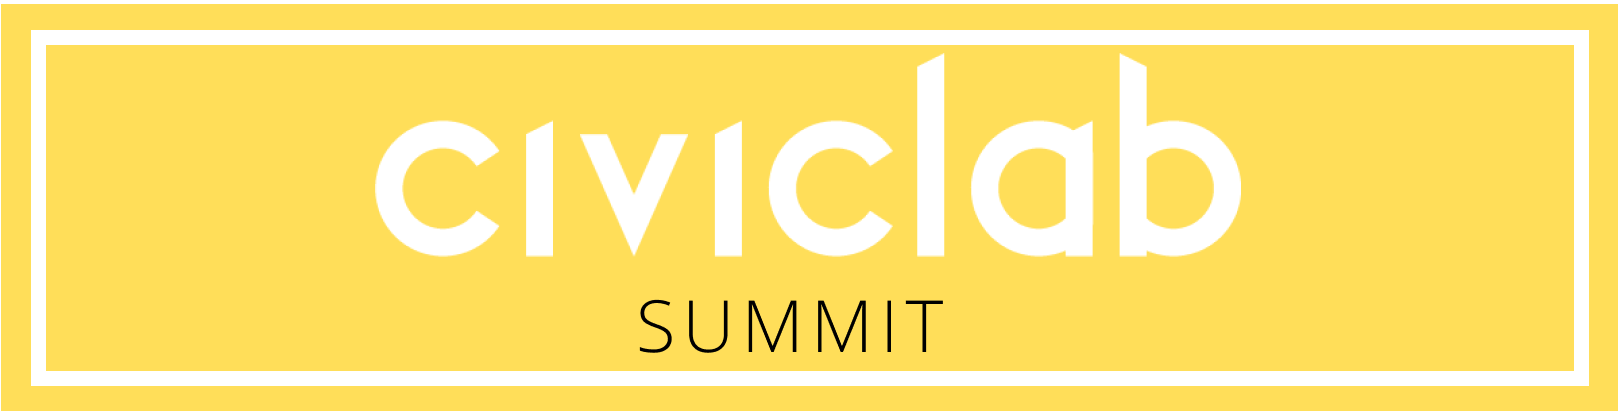 Civic Lab Summit